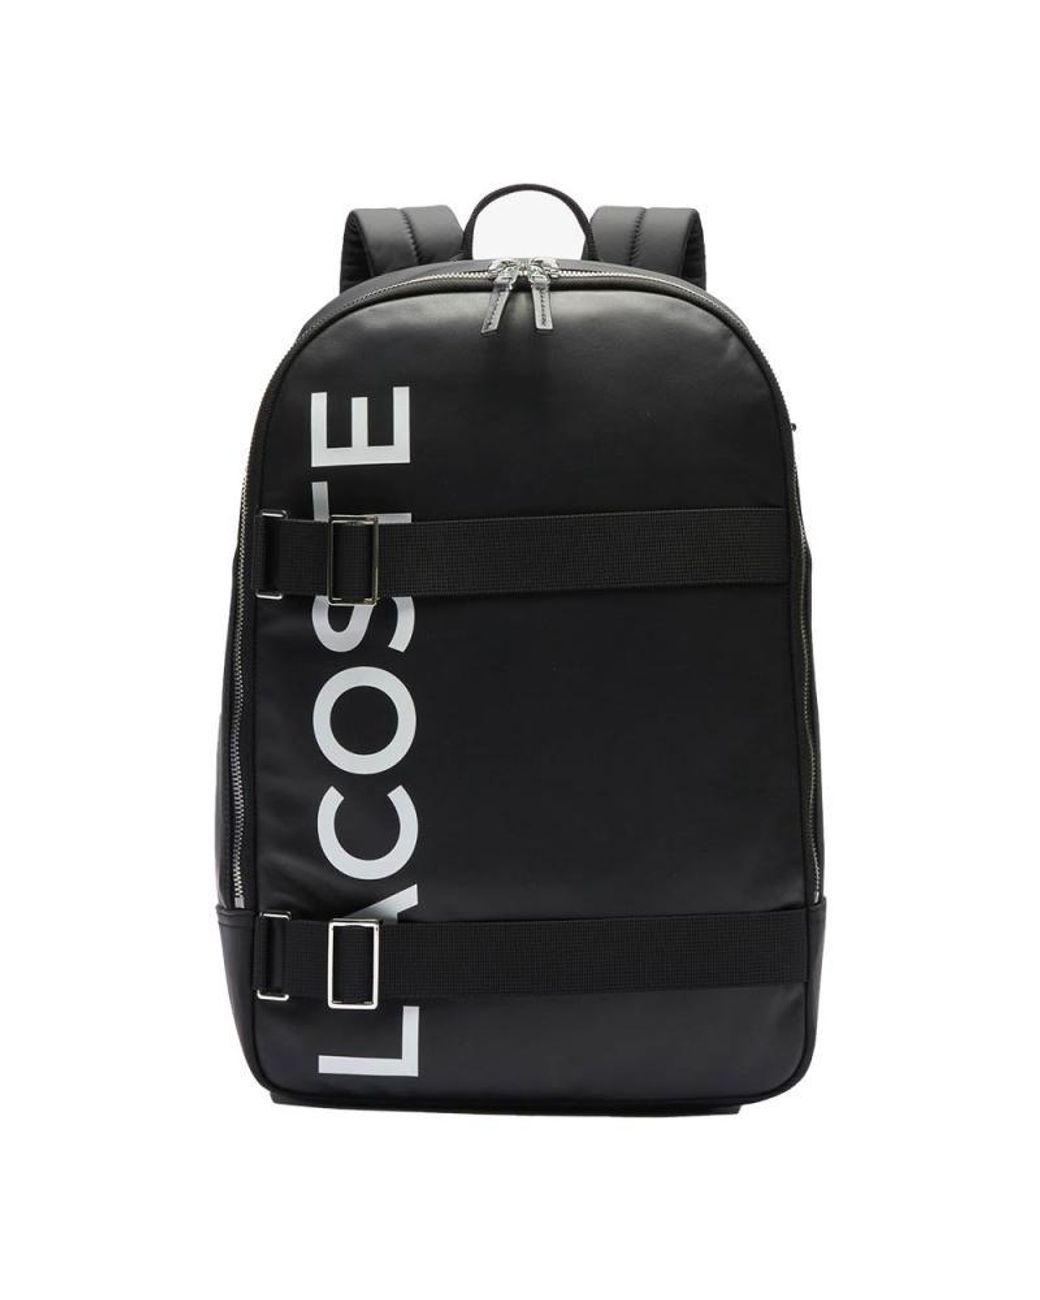 Lacoste Leather Black Backpack for Men - Lyst